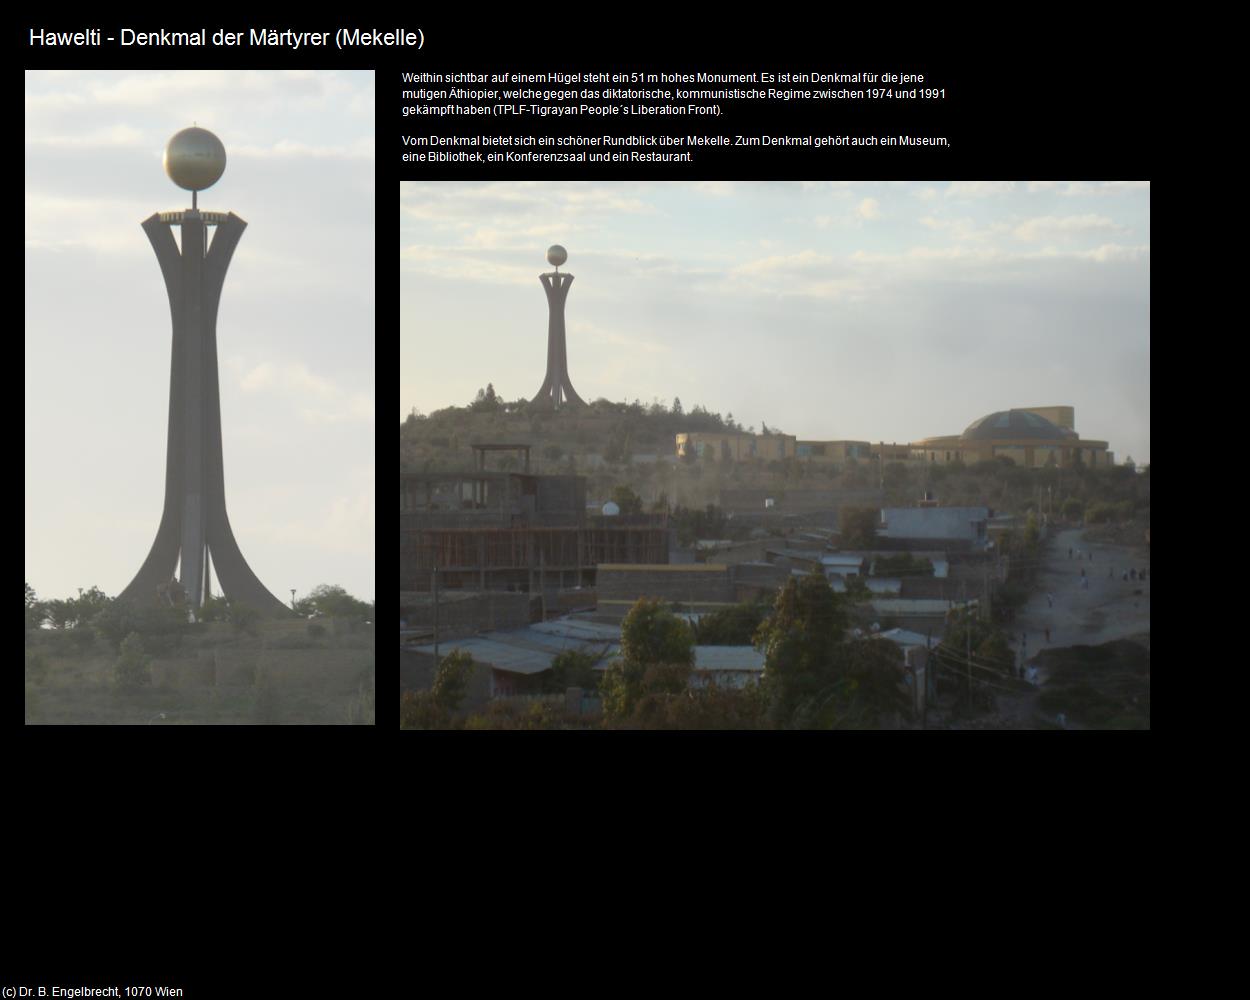 Hawelti - Denkmal der Märtyrer  (Mekelle) in Äthiopien